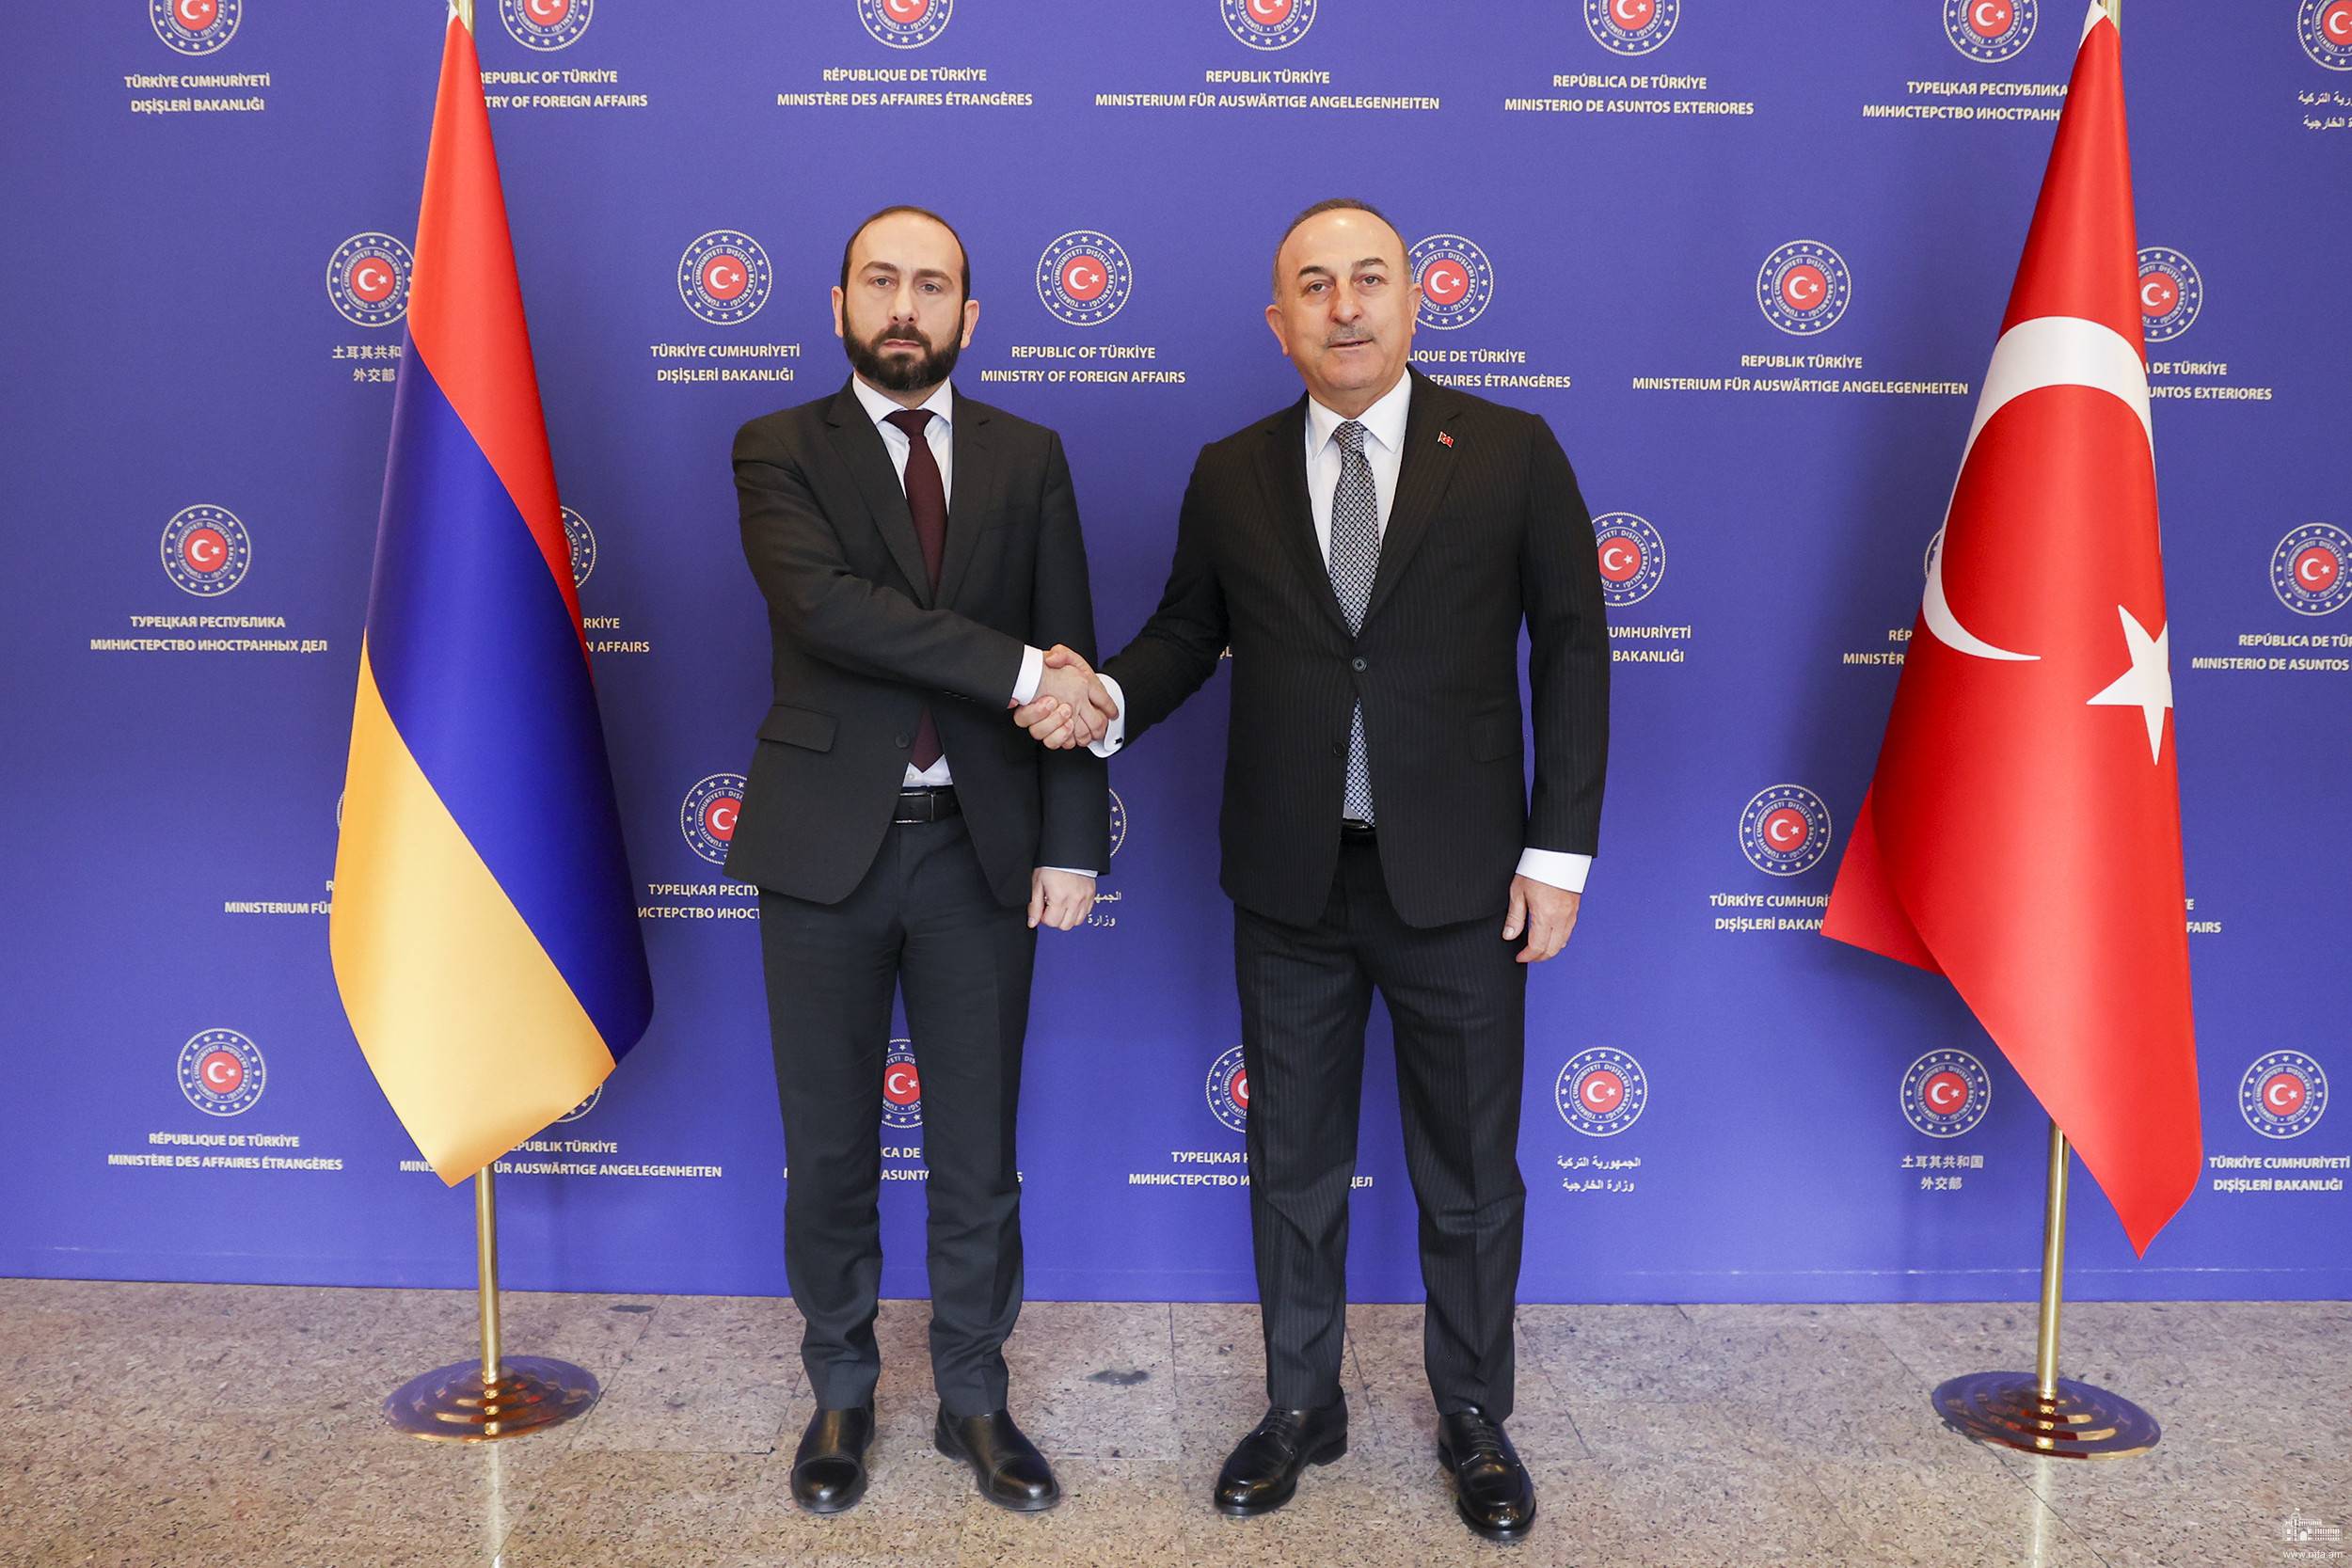 Mirzoyan-Cavusoglu meeting in Ankara